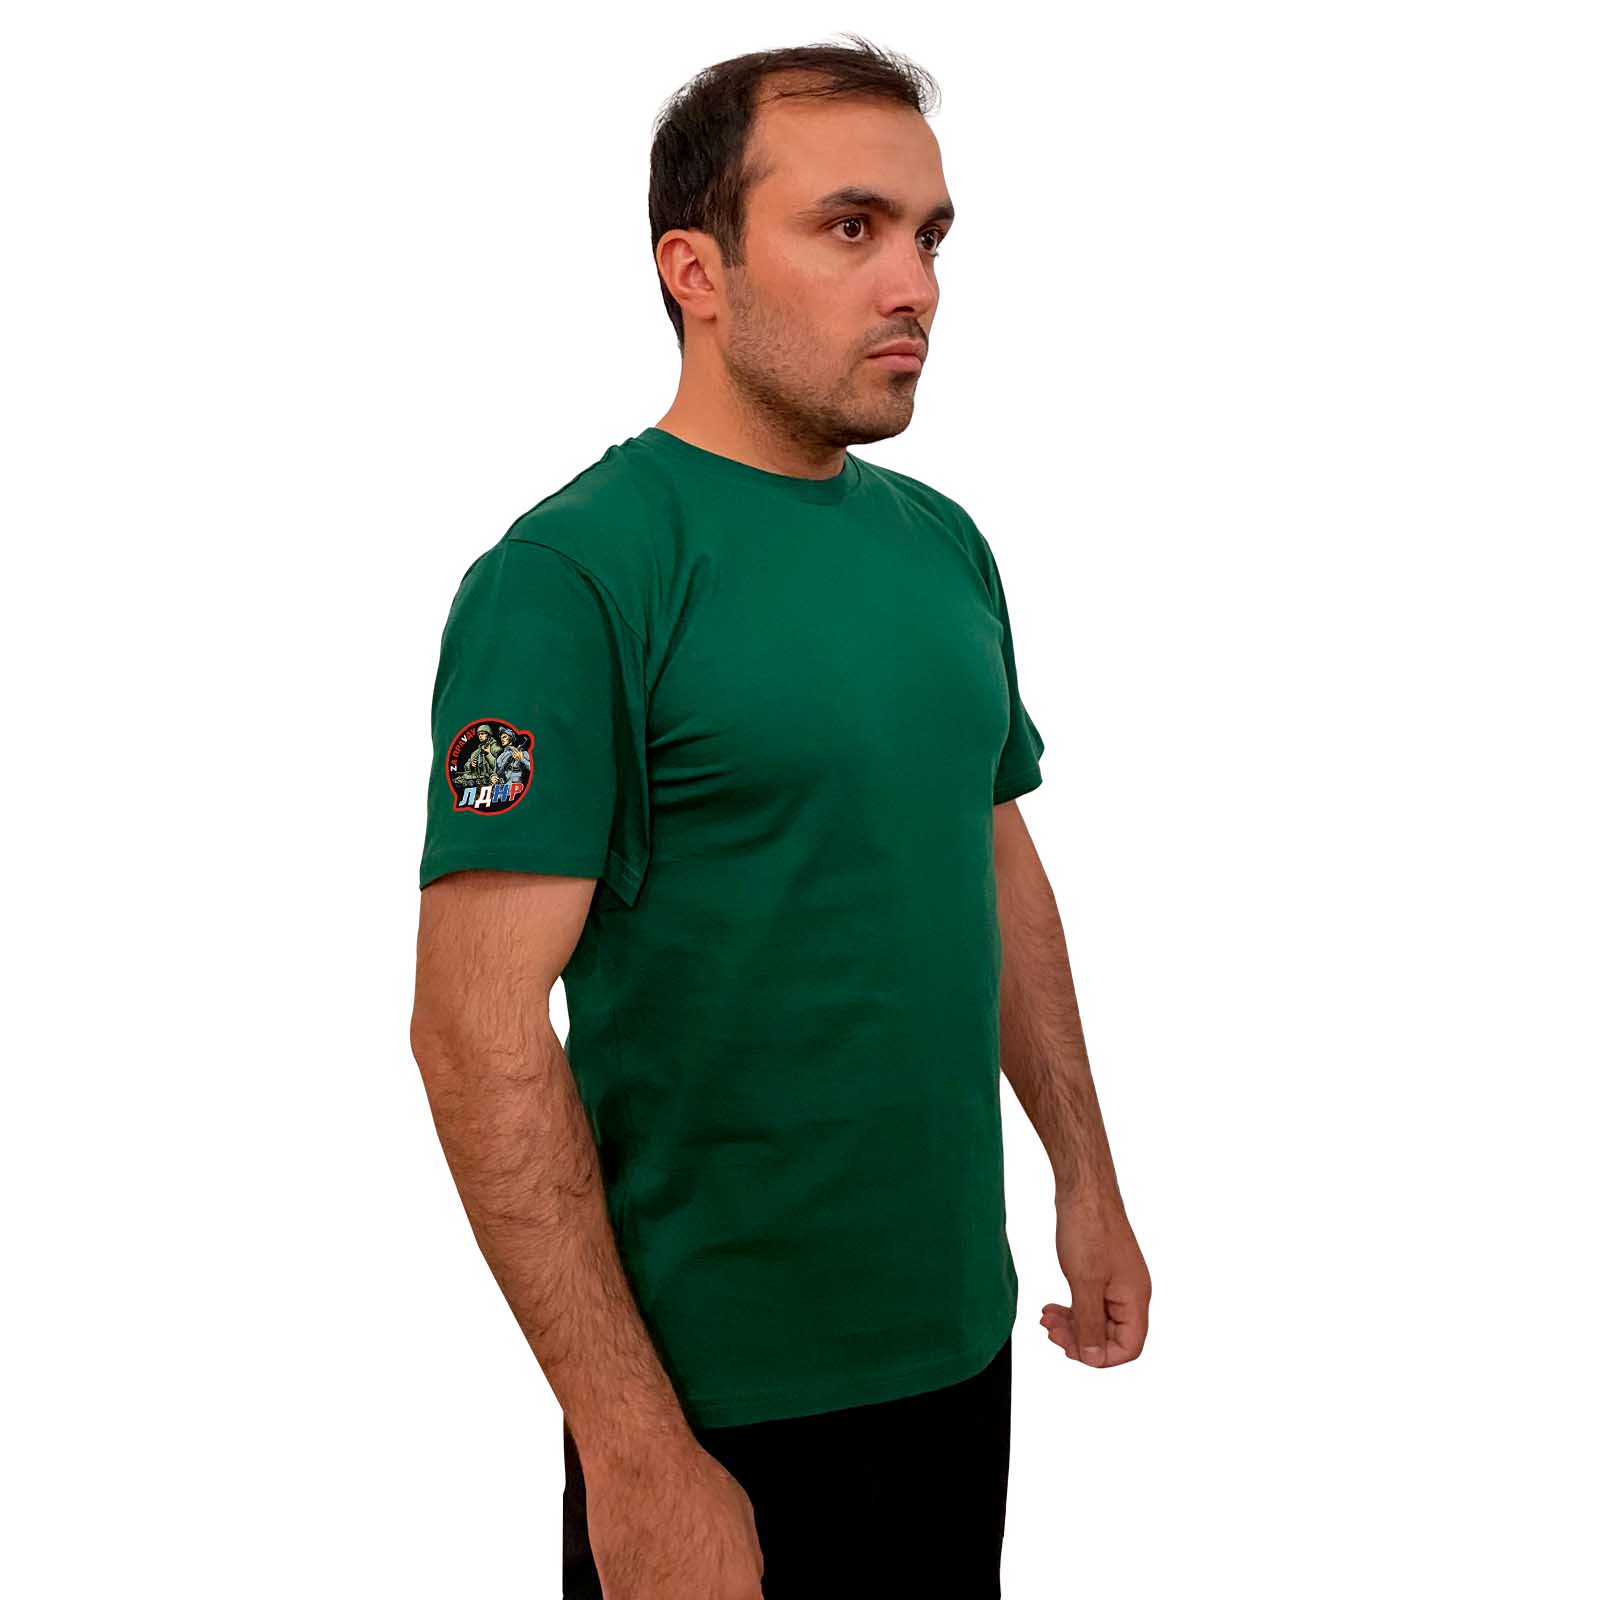 Зелёная футболка с термотрансфером ЛДНР "Zа праVду" на рукаве